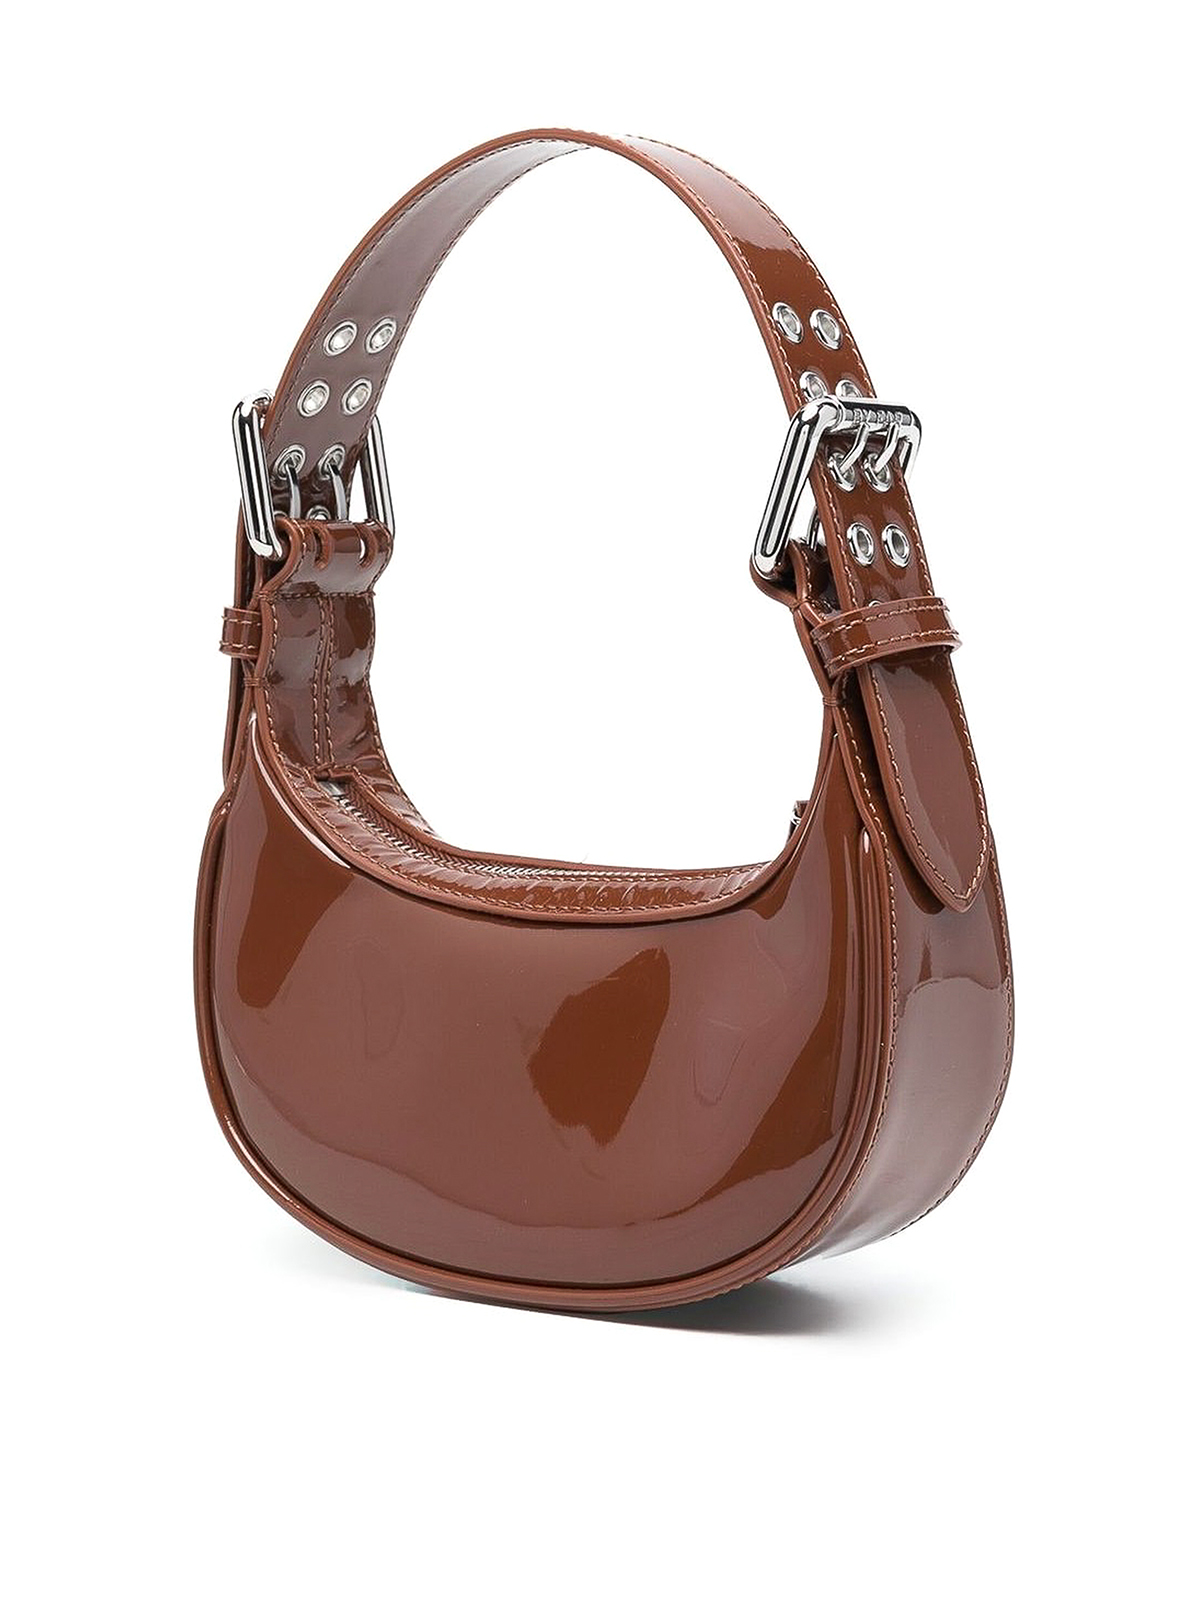 Sexy Large Black Patent Leather Handbag with Zip Details and Hardware  Designer Italian Black Patent Leather Purse Bag Career Handbag